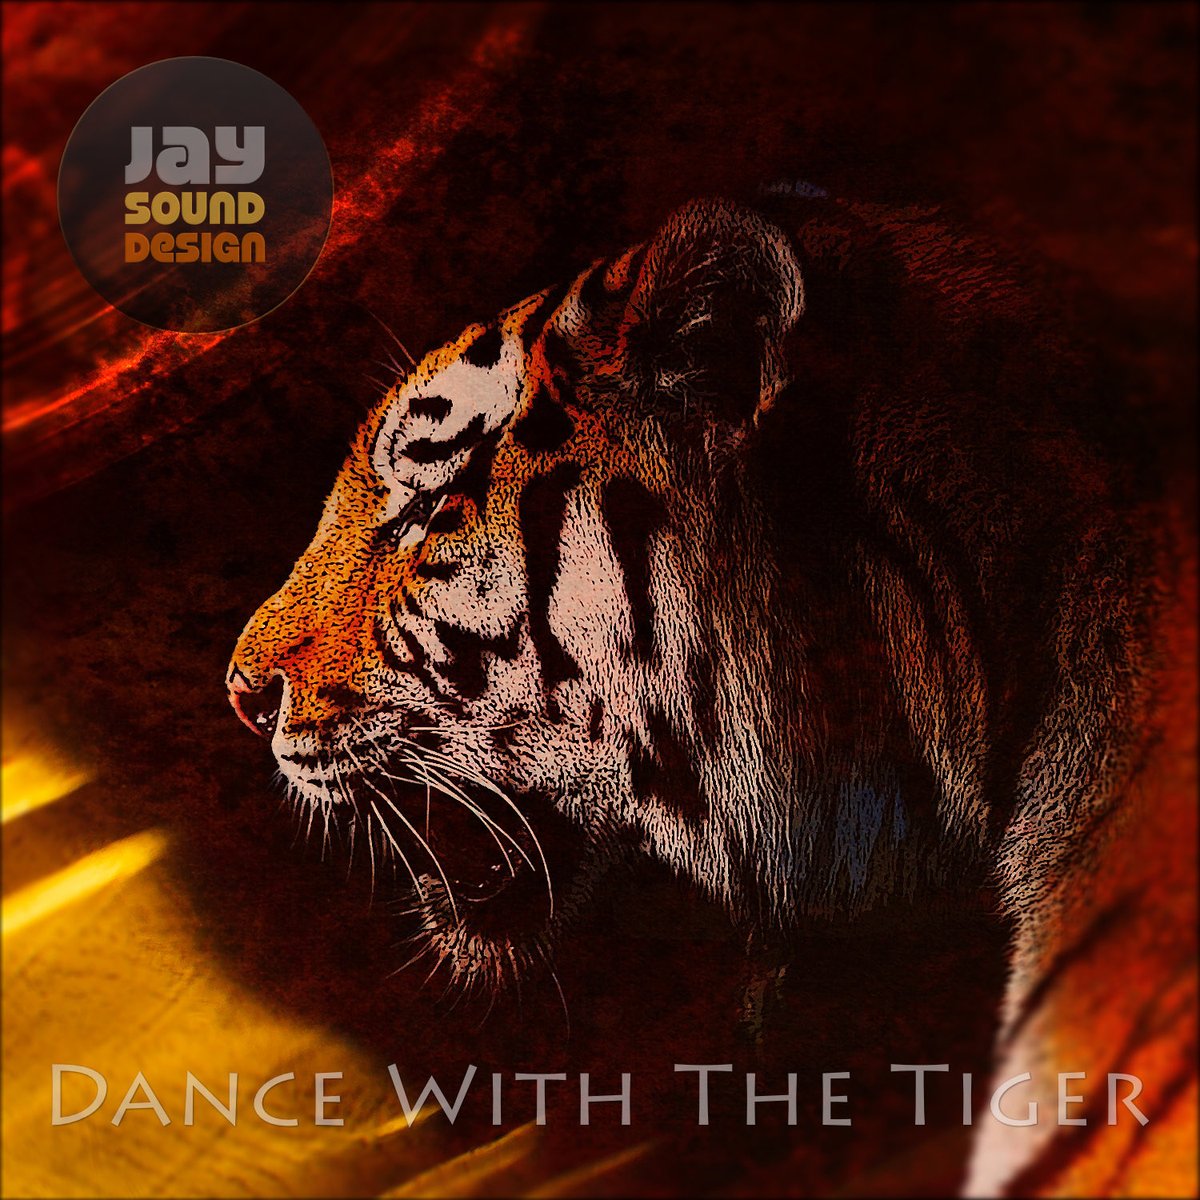 DANCE WITH THE TIGER #Music #3Daudio #SoundDesign - Listen on #SoundCloud soundcloud.com/jaysounddesign…